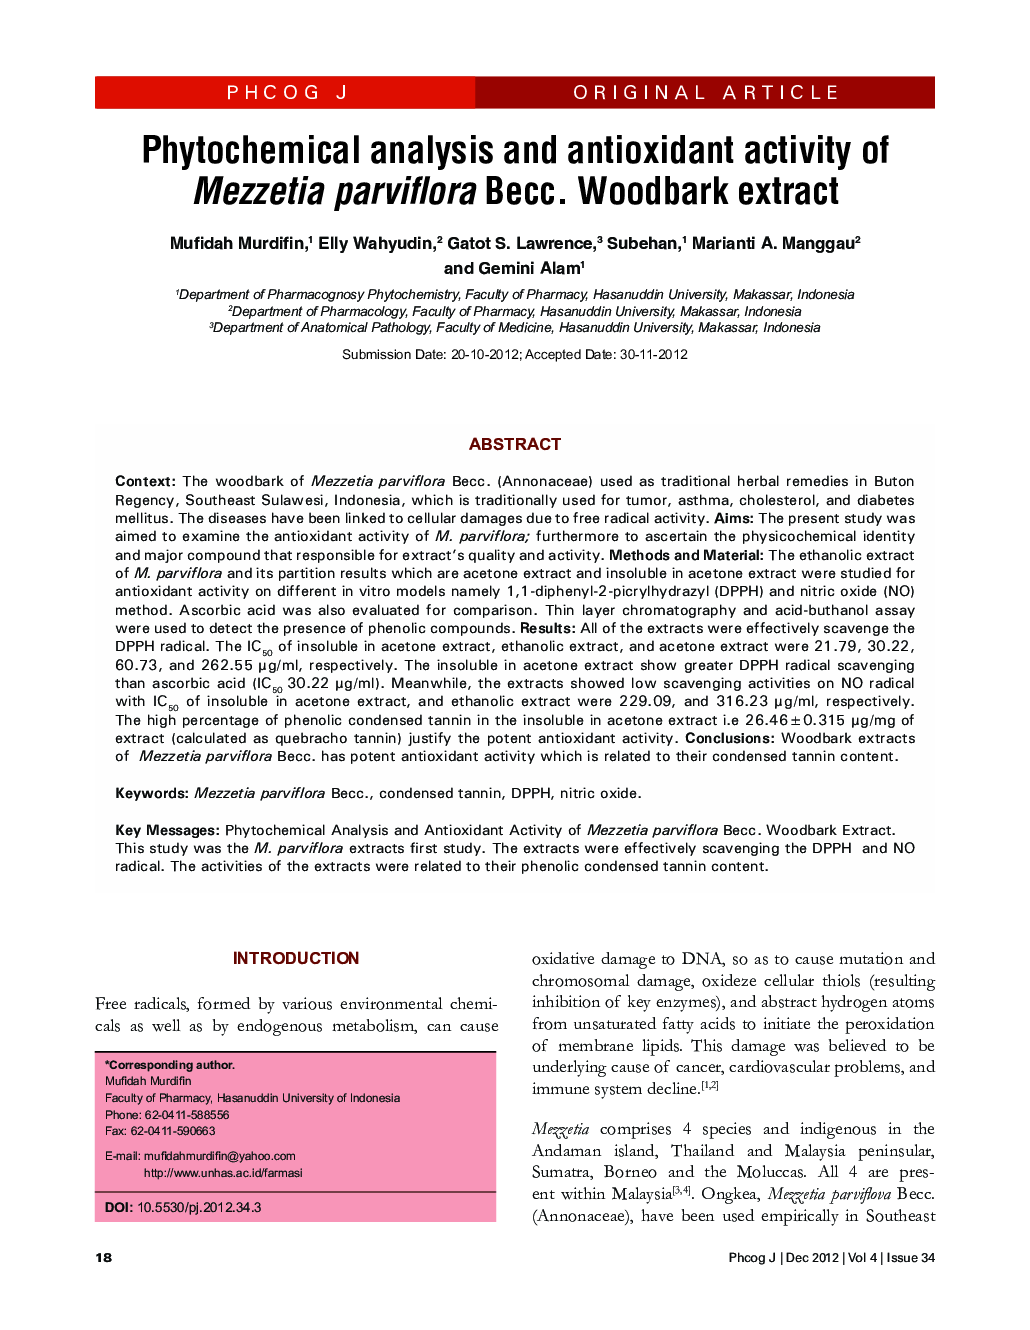 Phytochemical analysis and antioxidant activity of Mezzetia parviflora Becc. Woodbark extract